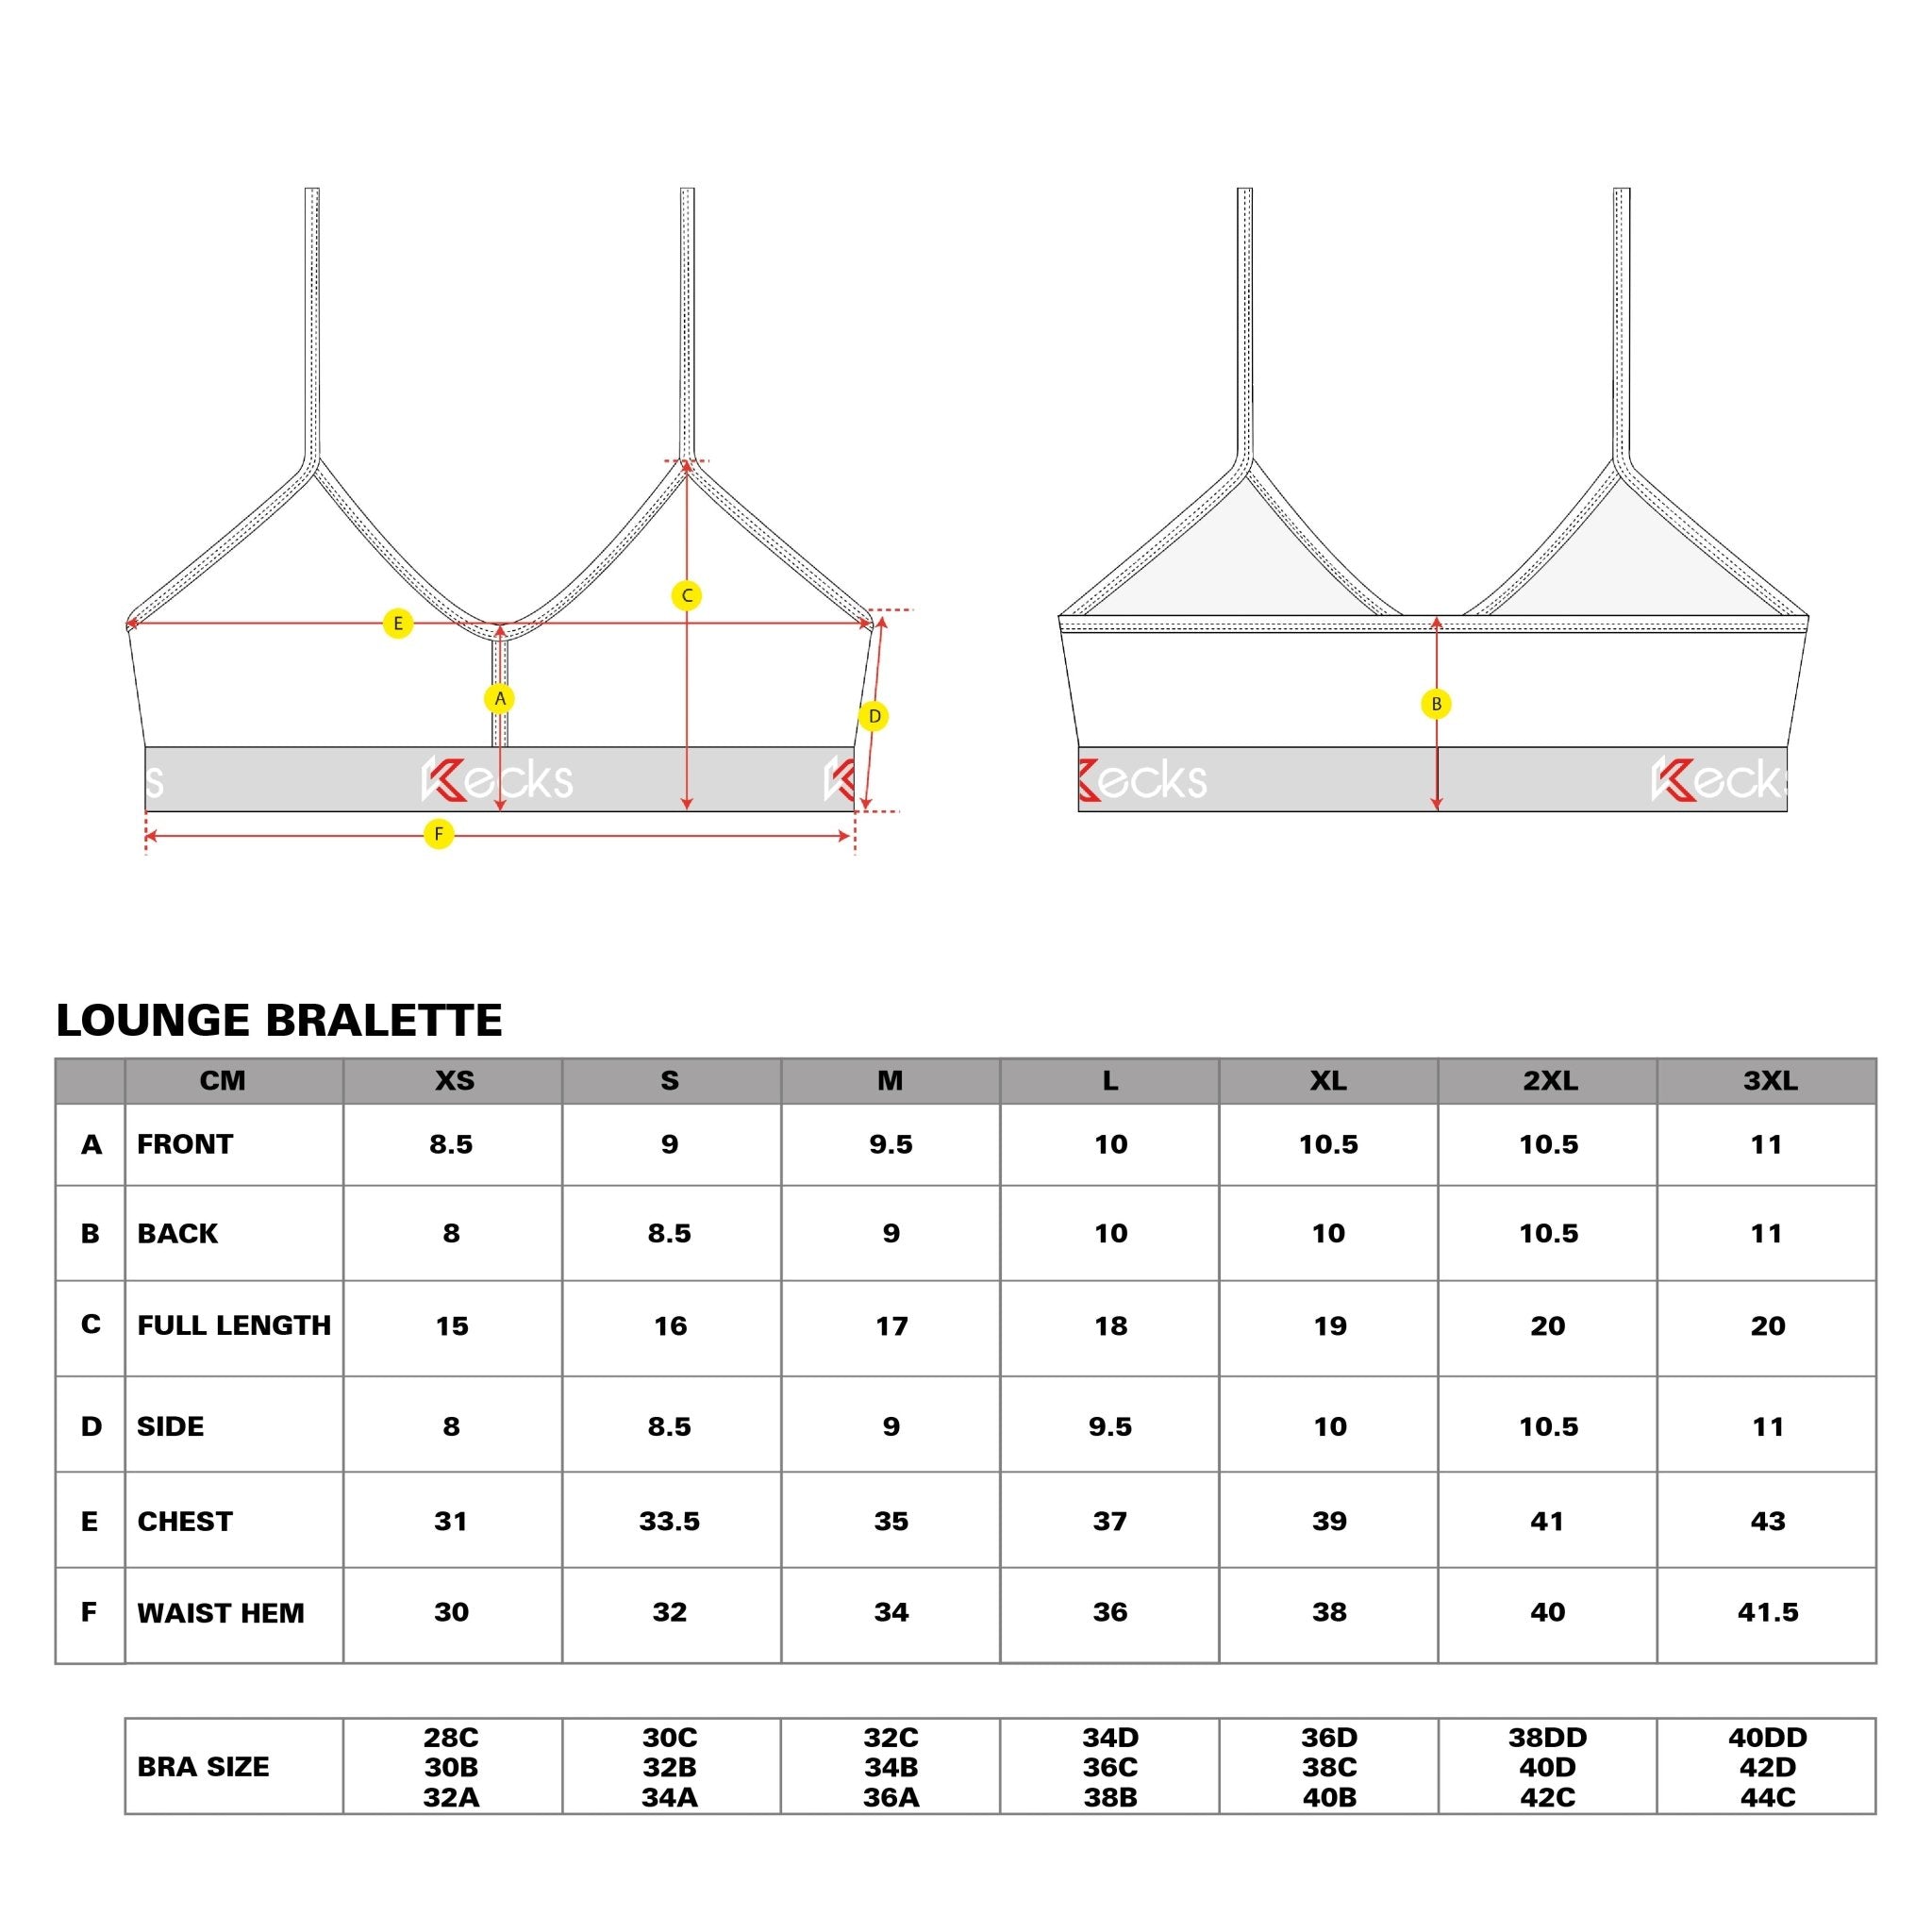 Inline Lounge Bralette - Kecks